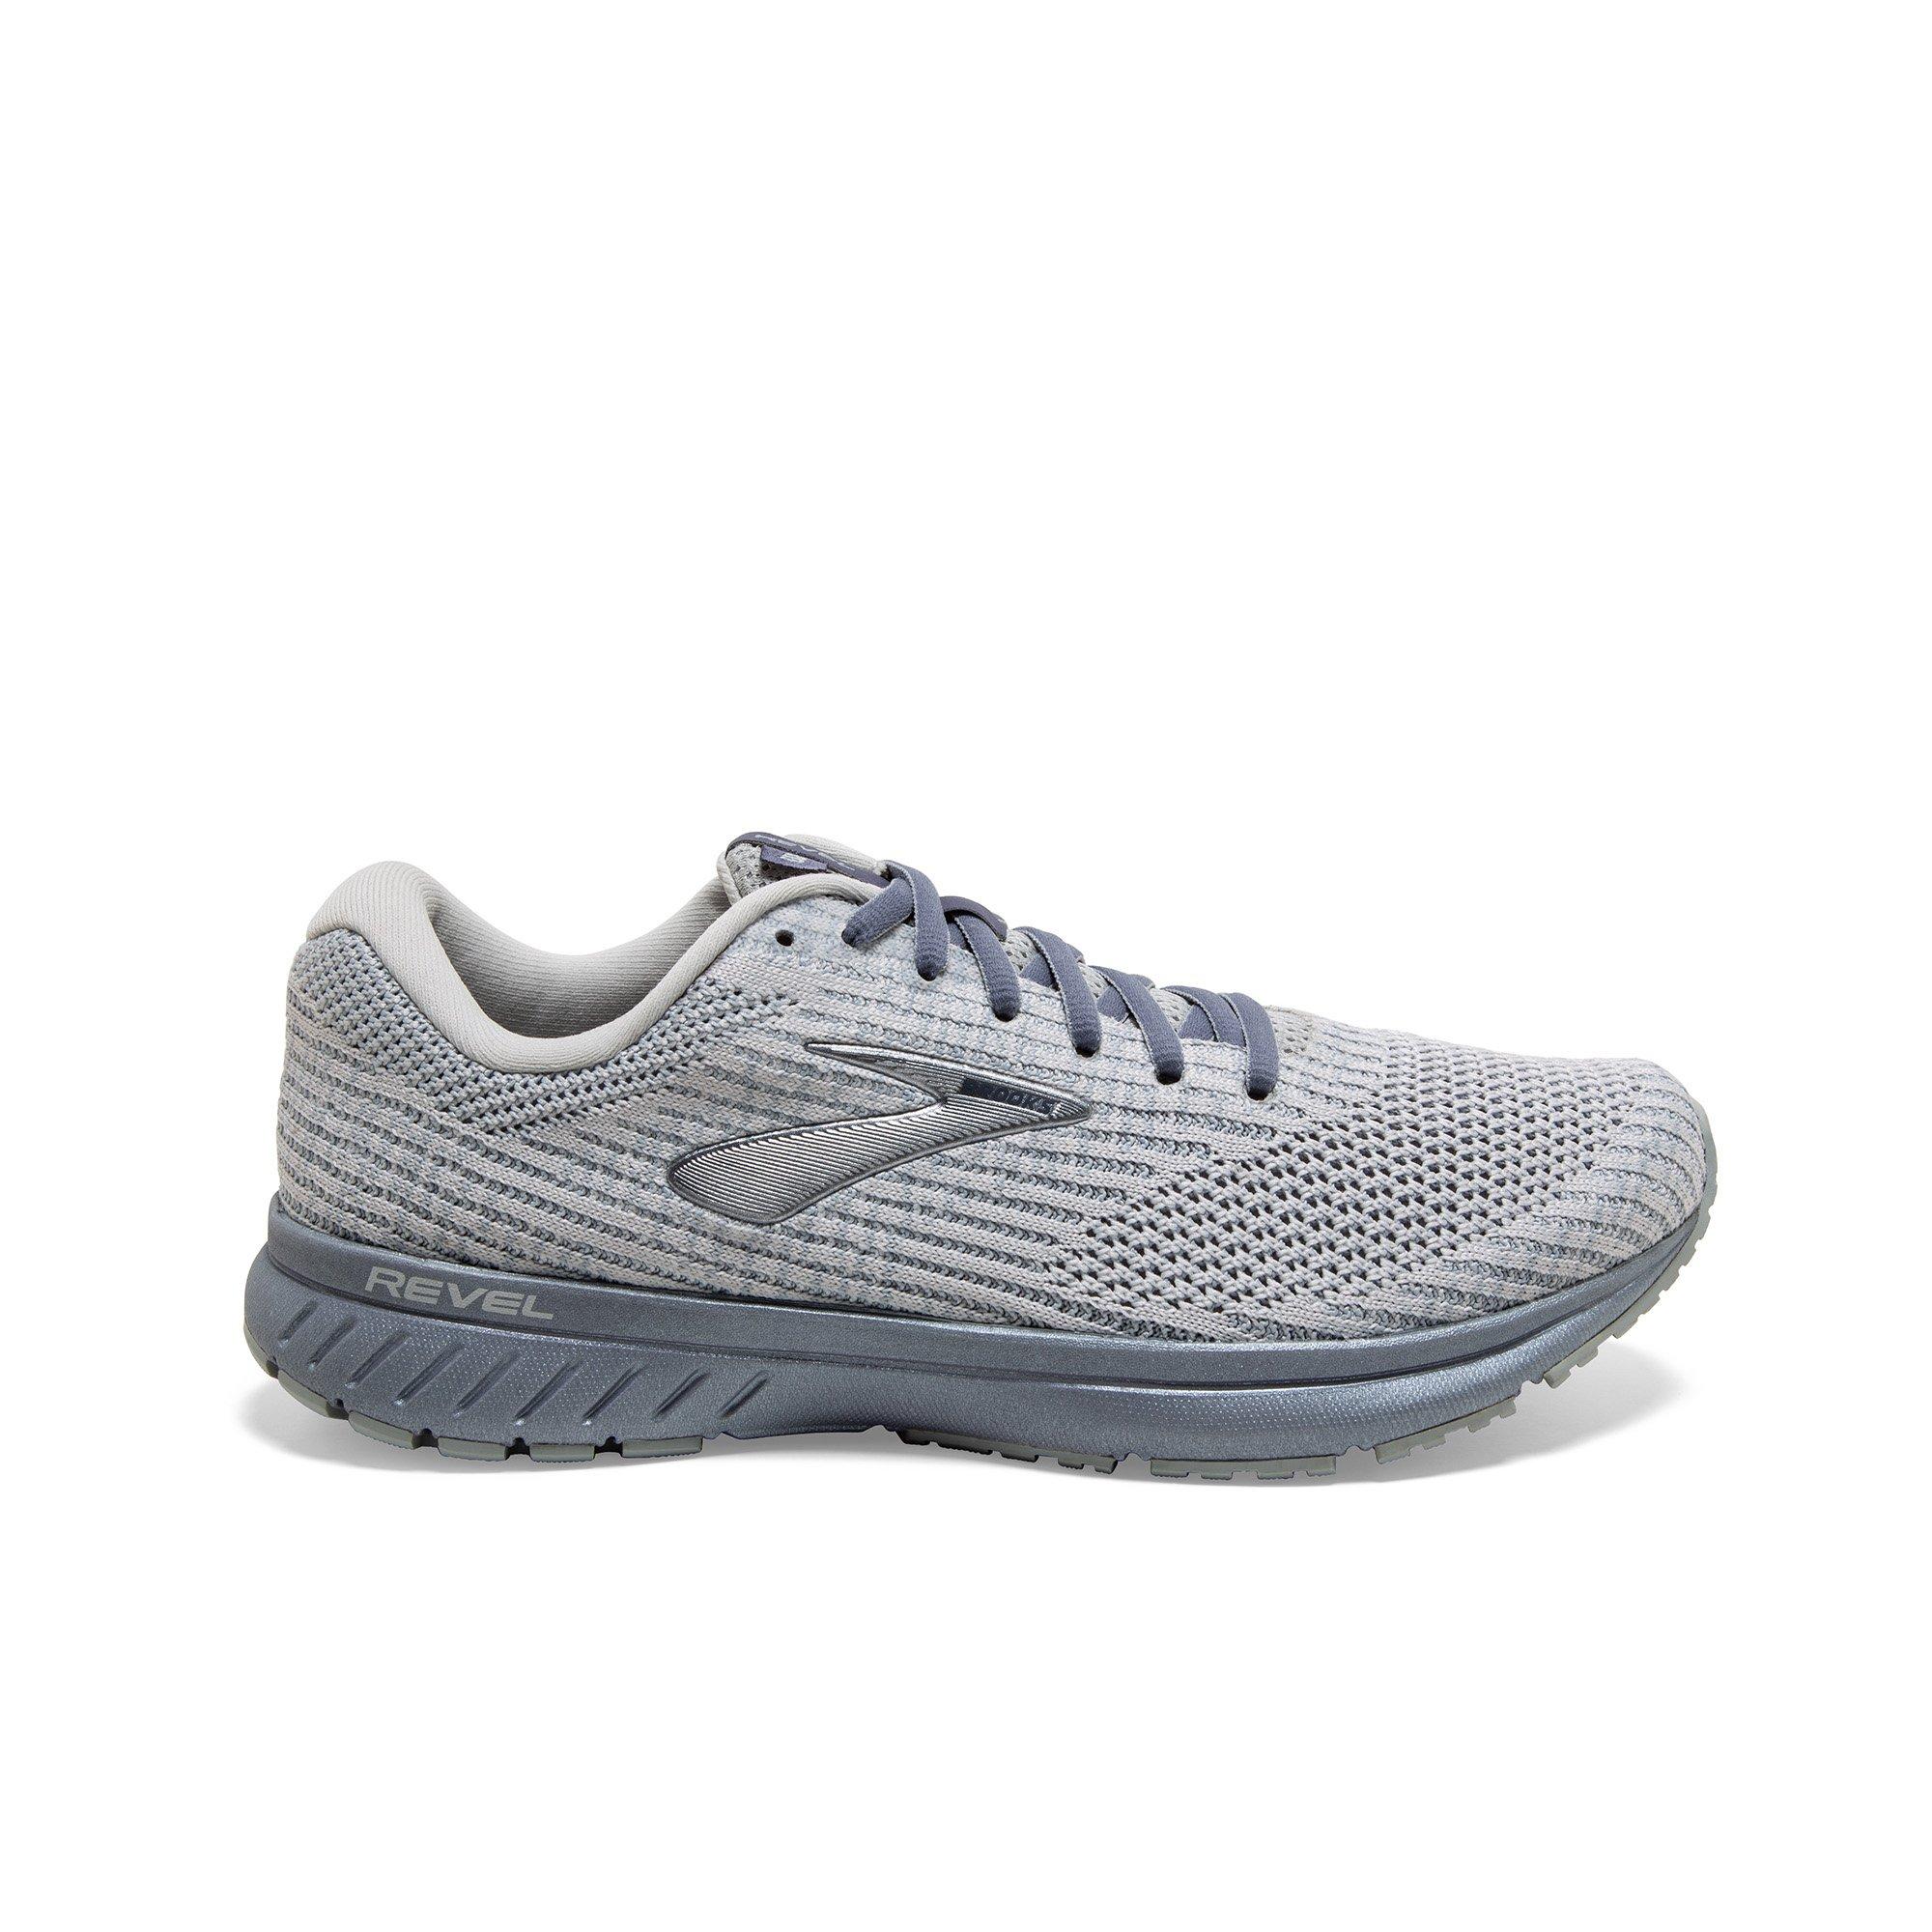 brooks grey womens running shoes